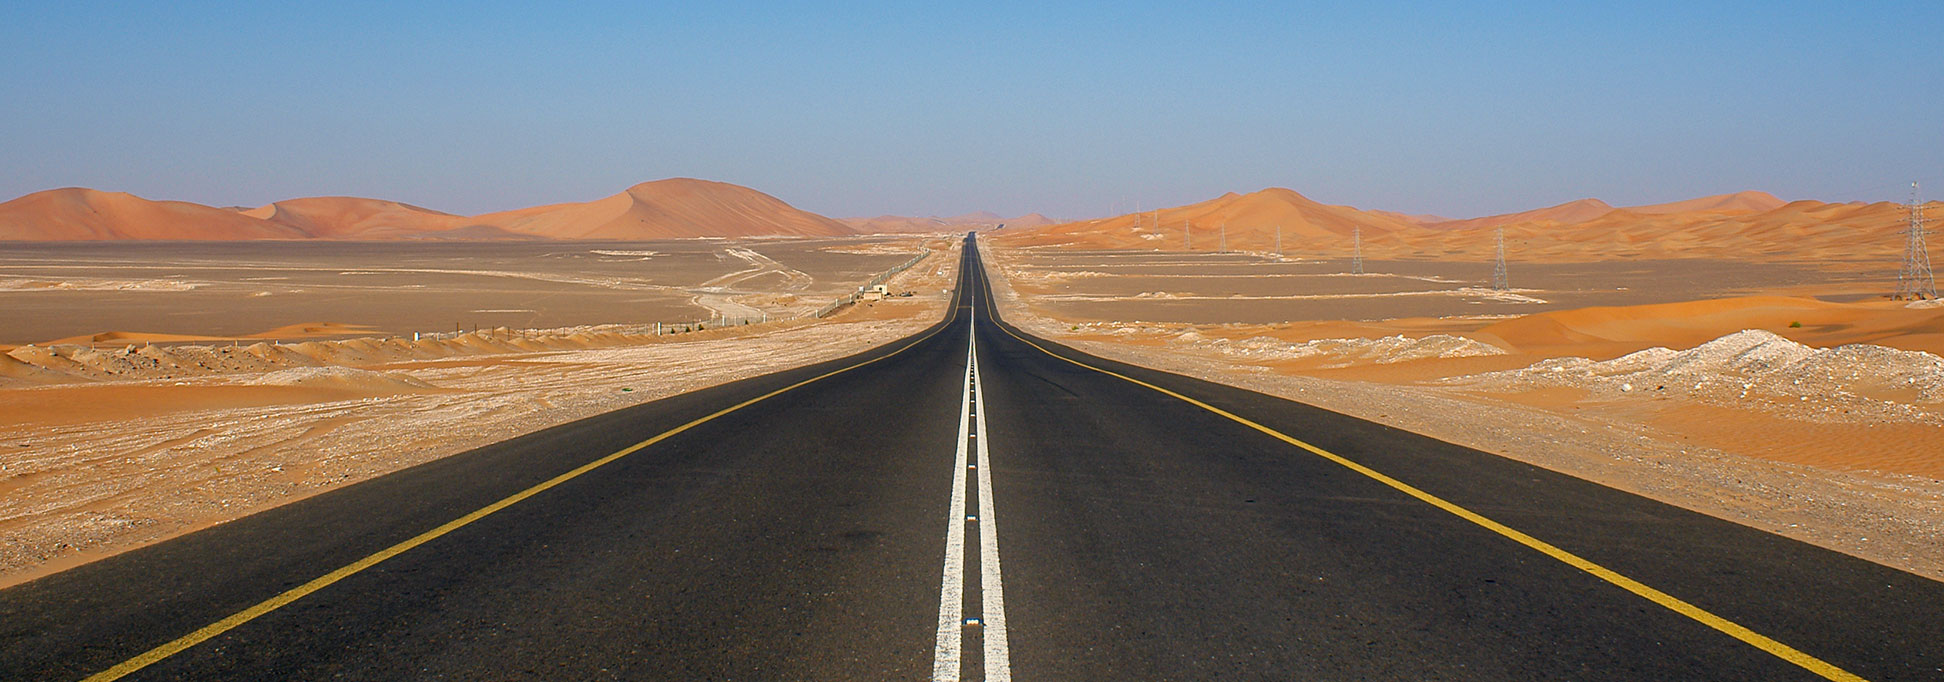 Desert road in the UAE